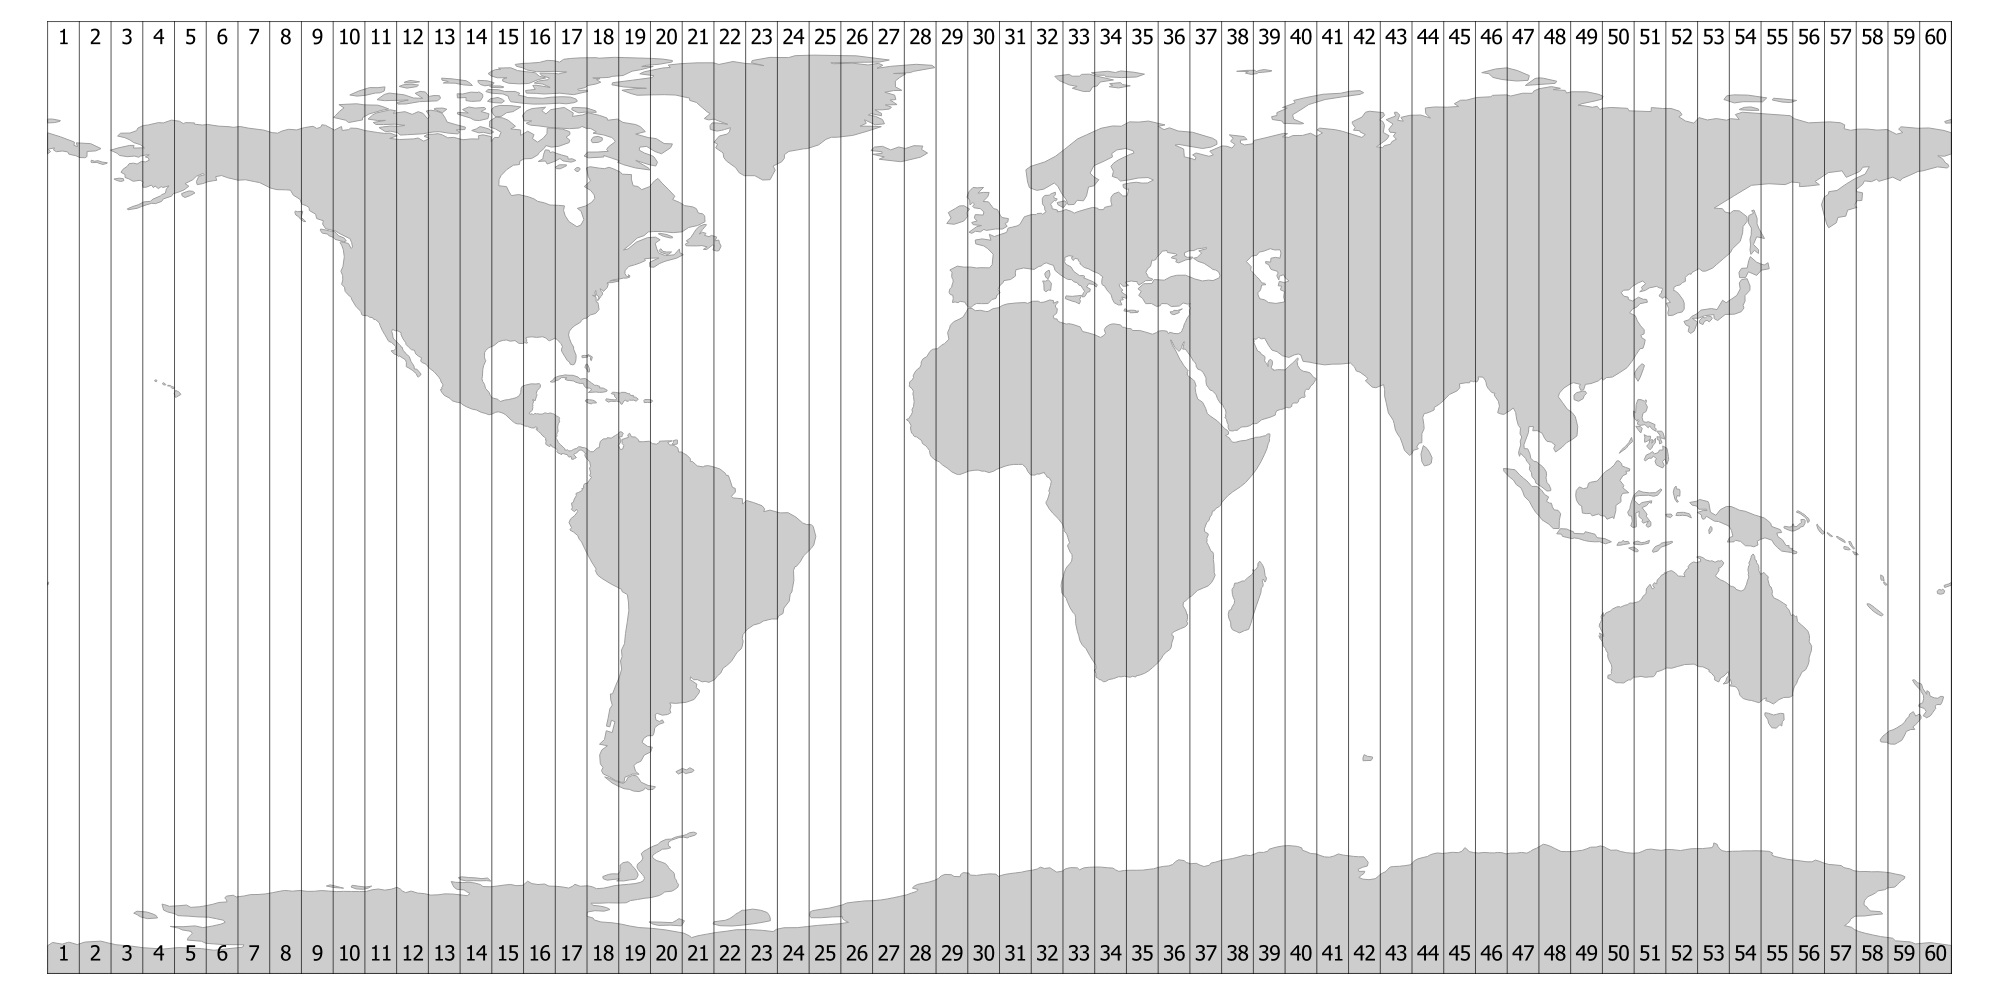 Universal Transverse Mercator (UTM) zones